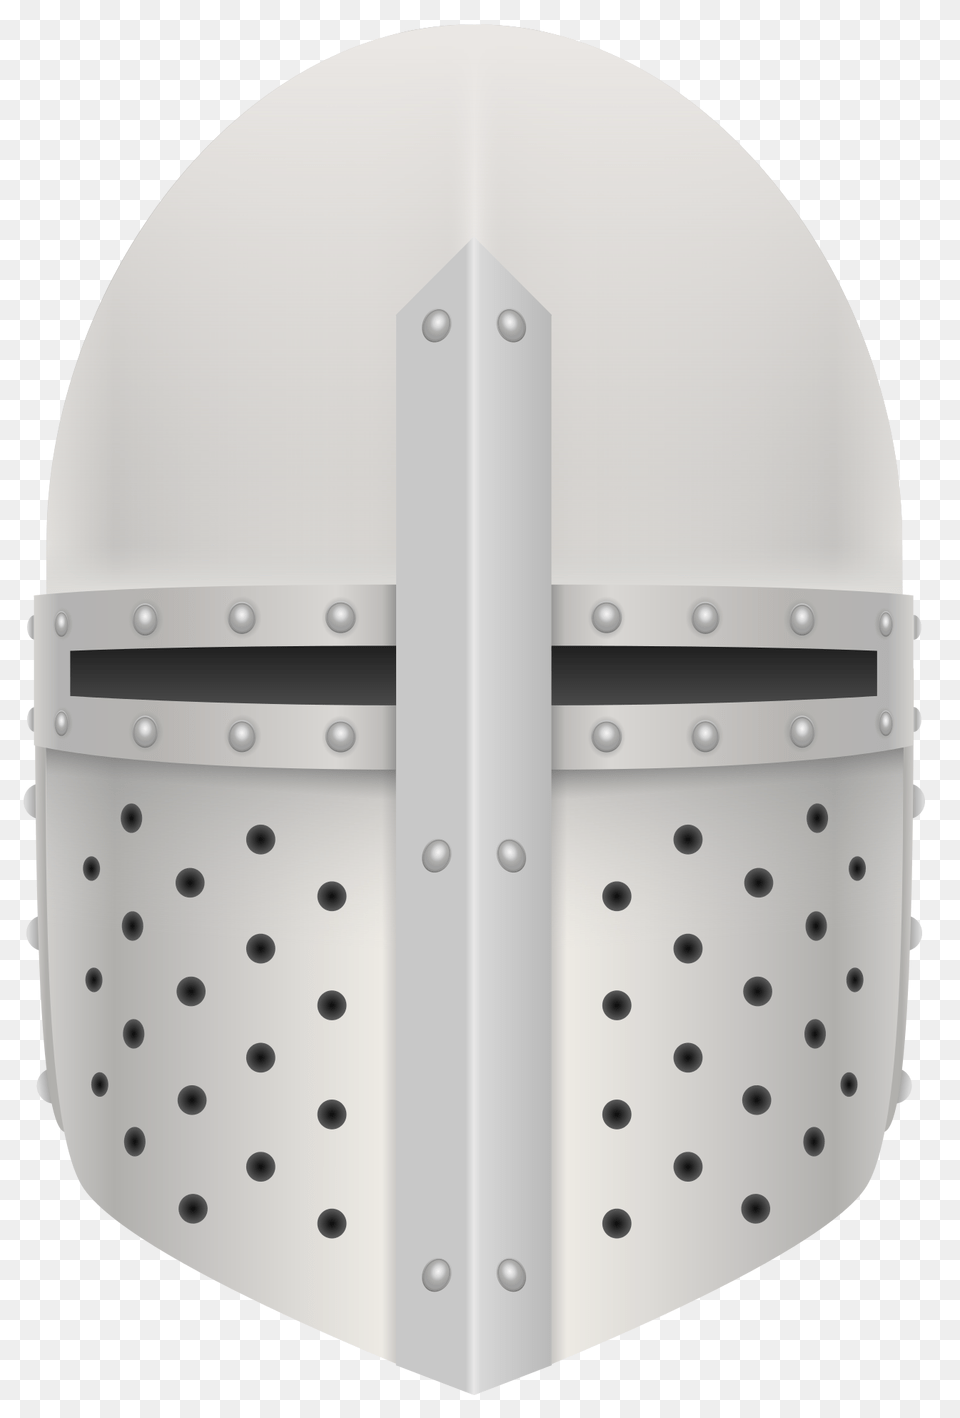 Pngpix Com Medieval Helmet Vector Transparent Armor Png Image